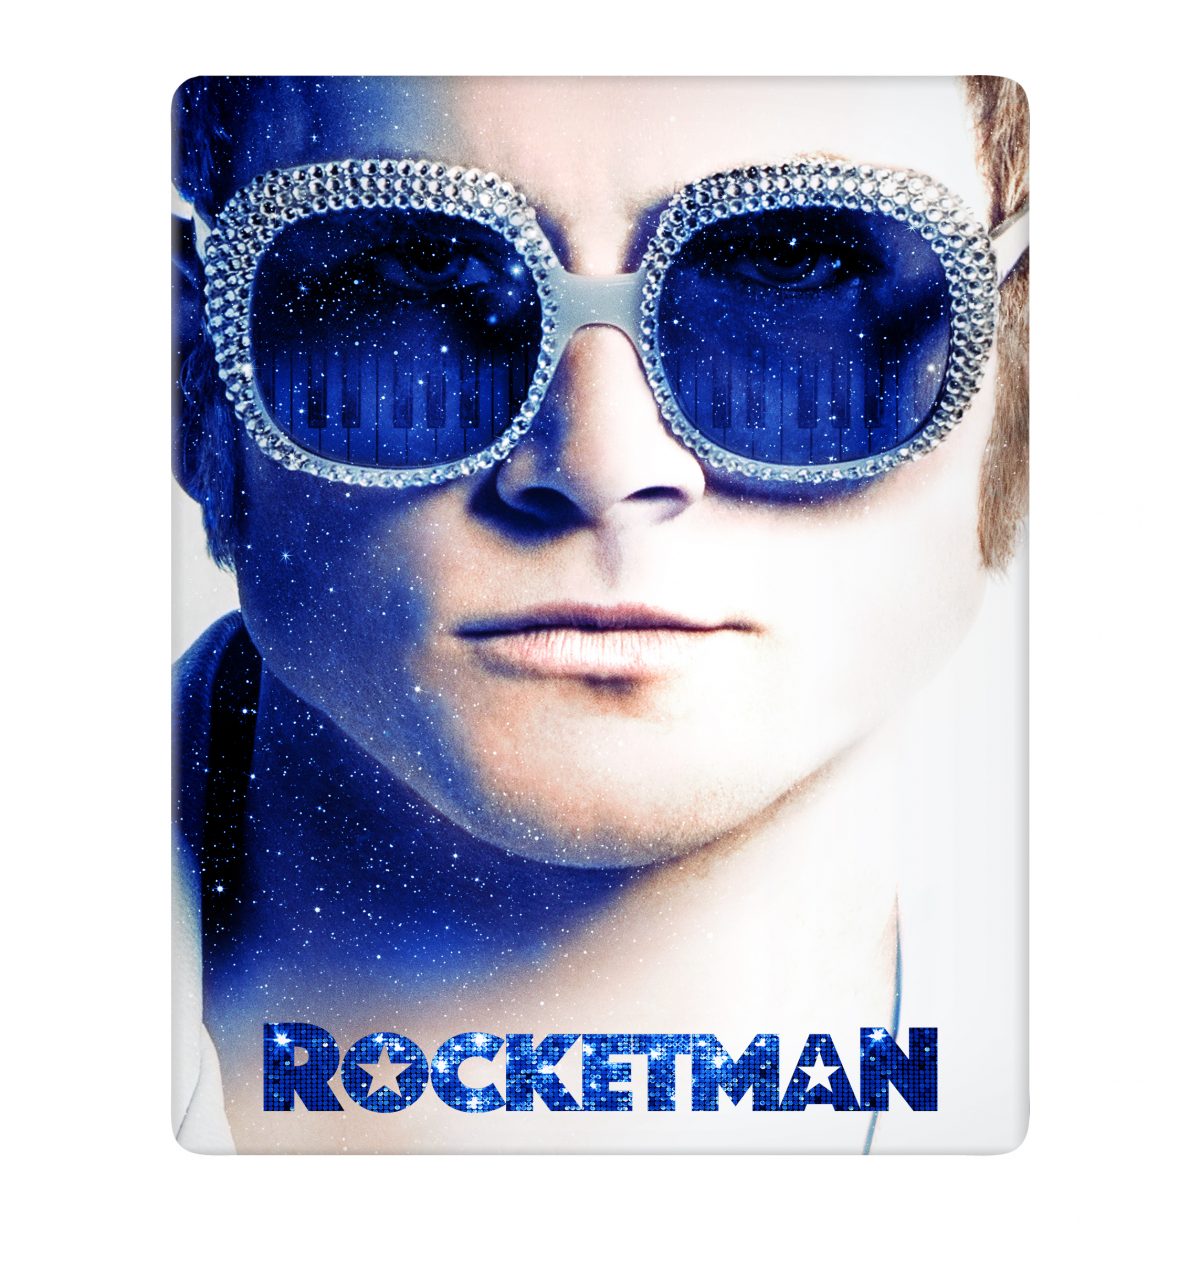 Rocketman Walmart Limited Edition Blu-Ray Combo Pack (Paramount Home Entertainment)